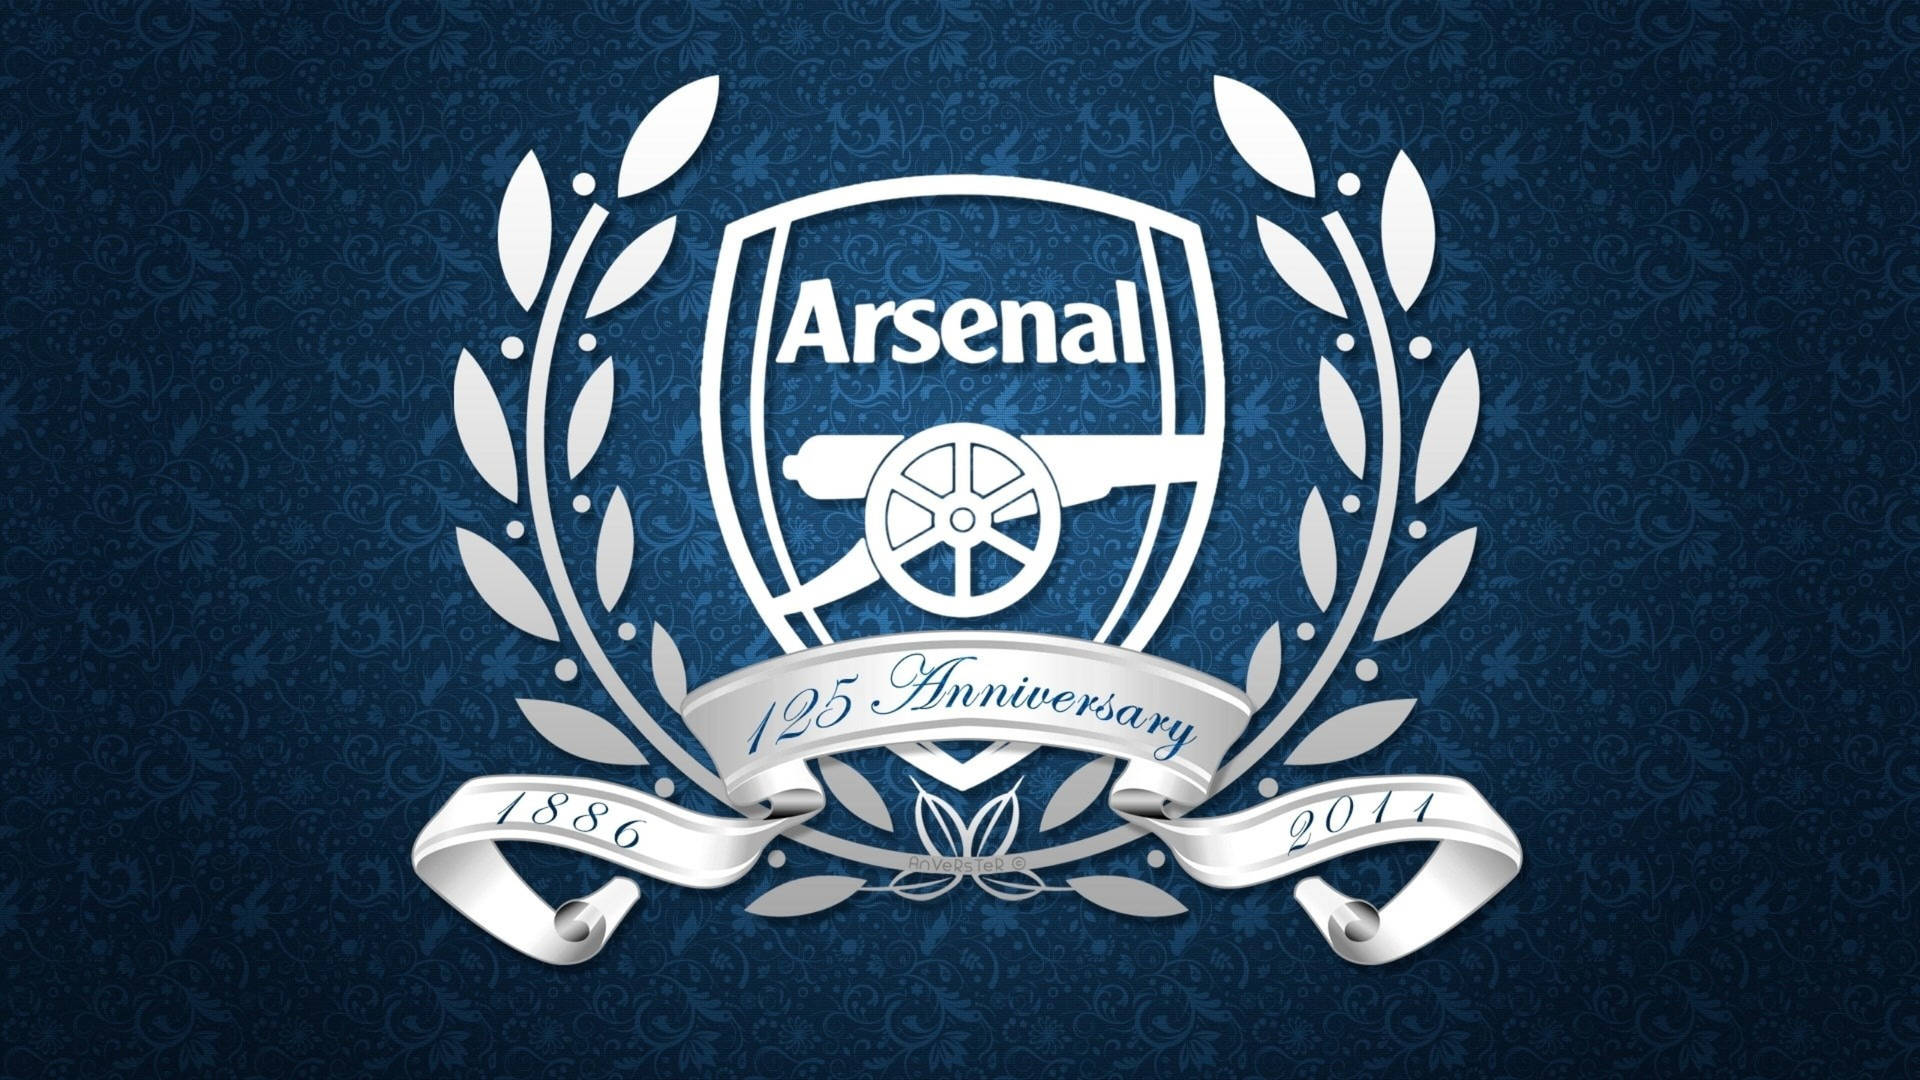 Top 999+ Arsenal Wallpaper Full HD, 4K Free to Use